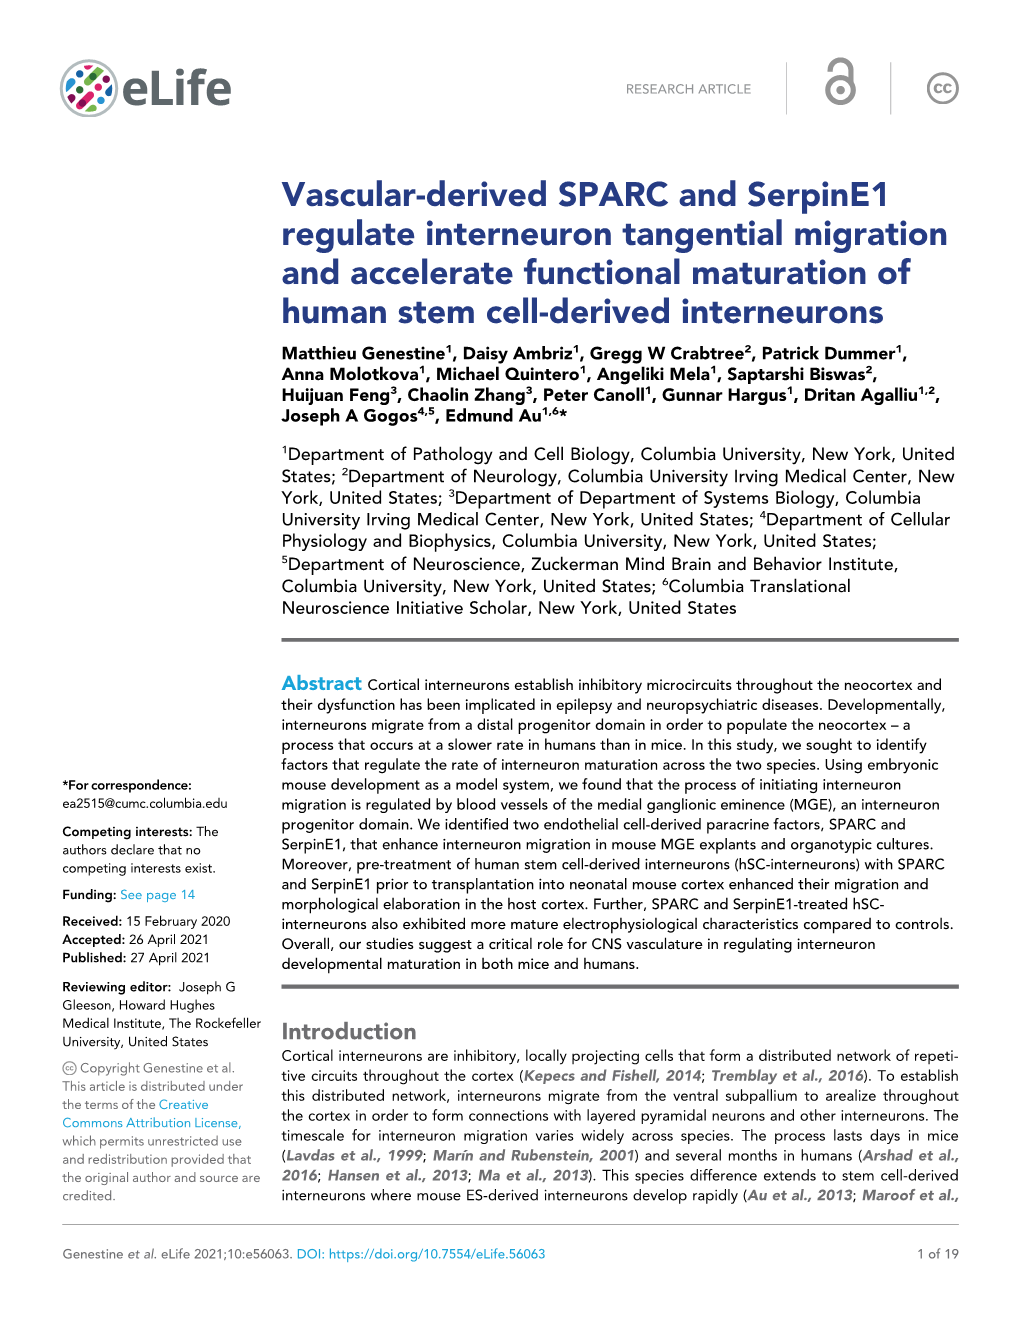 Vascular-Derived SPARC and Serpine1 Regulate Interneuron